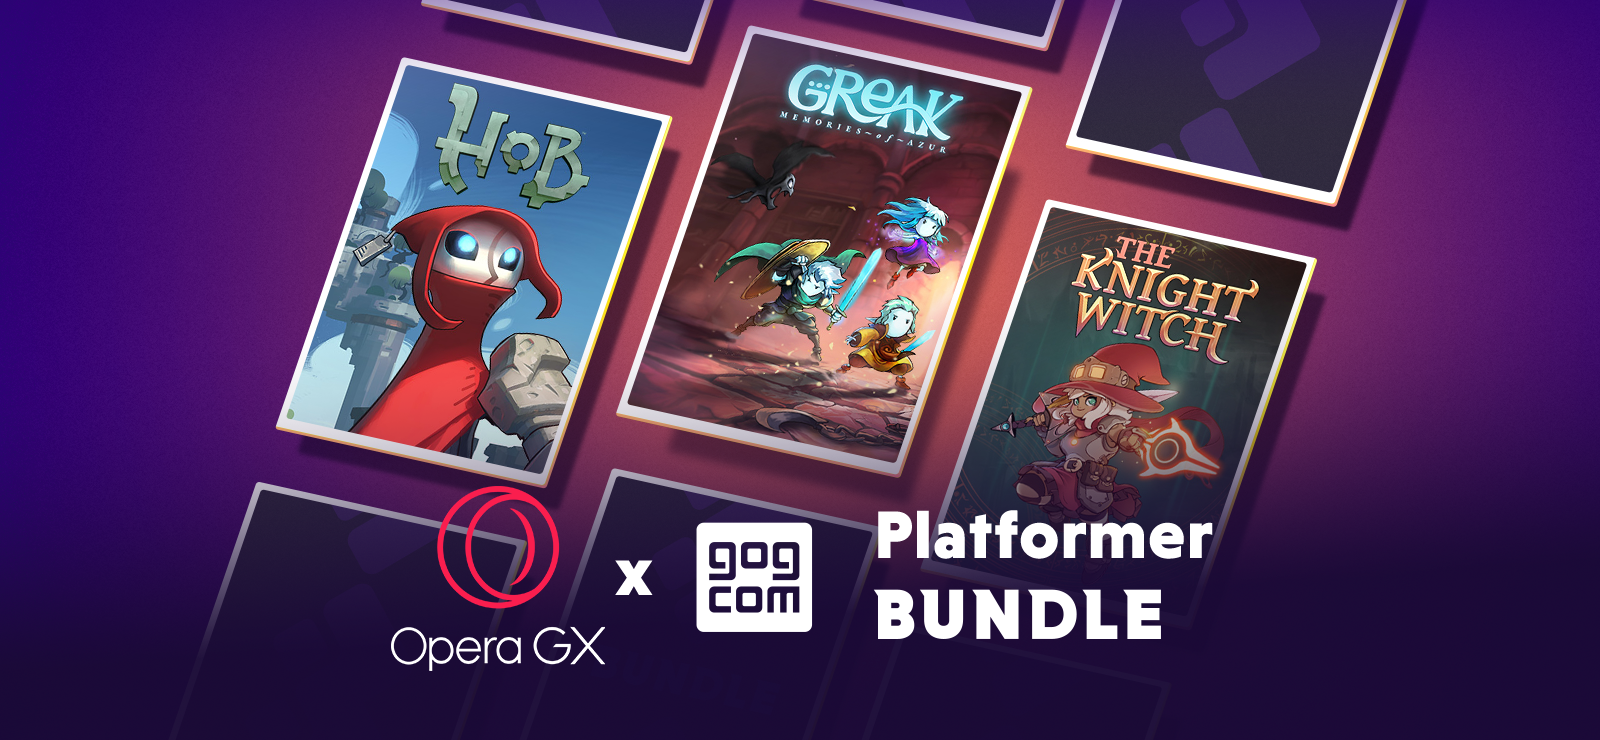 GOG-Opera GX Platformer Bundle